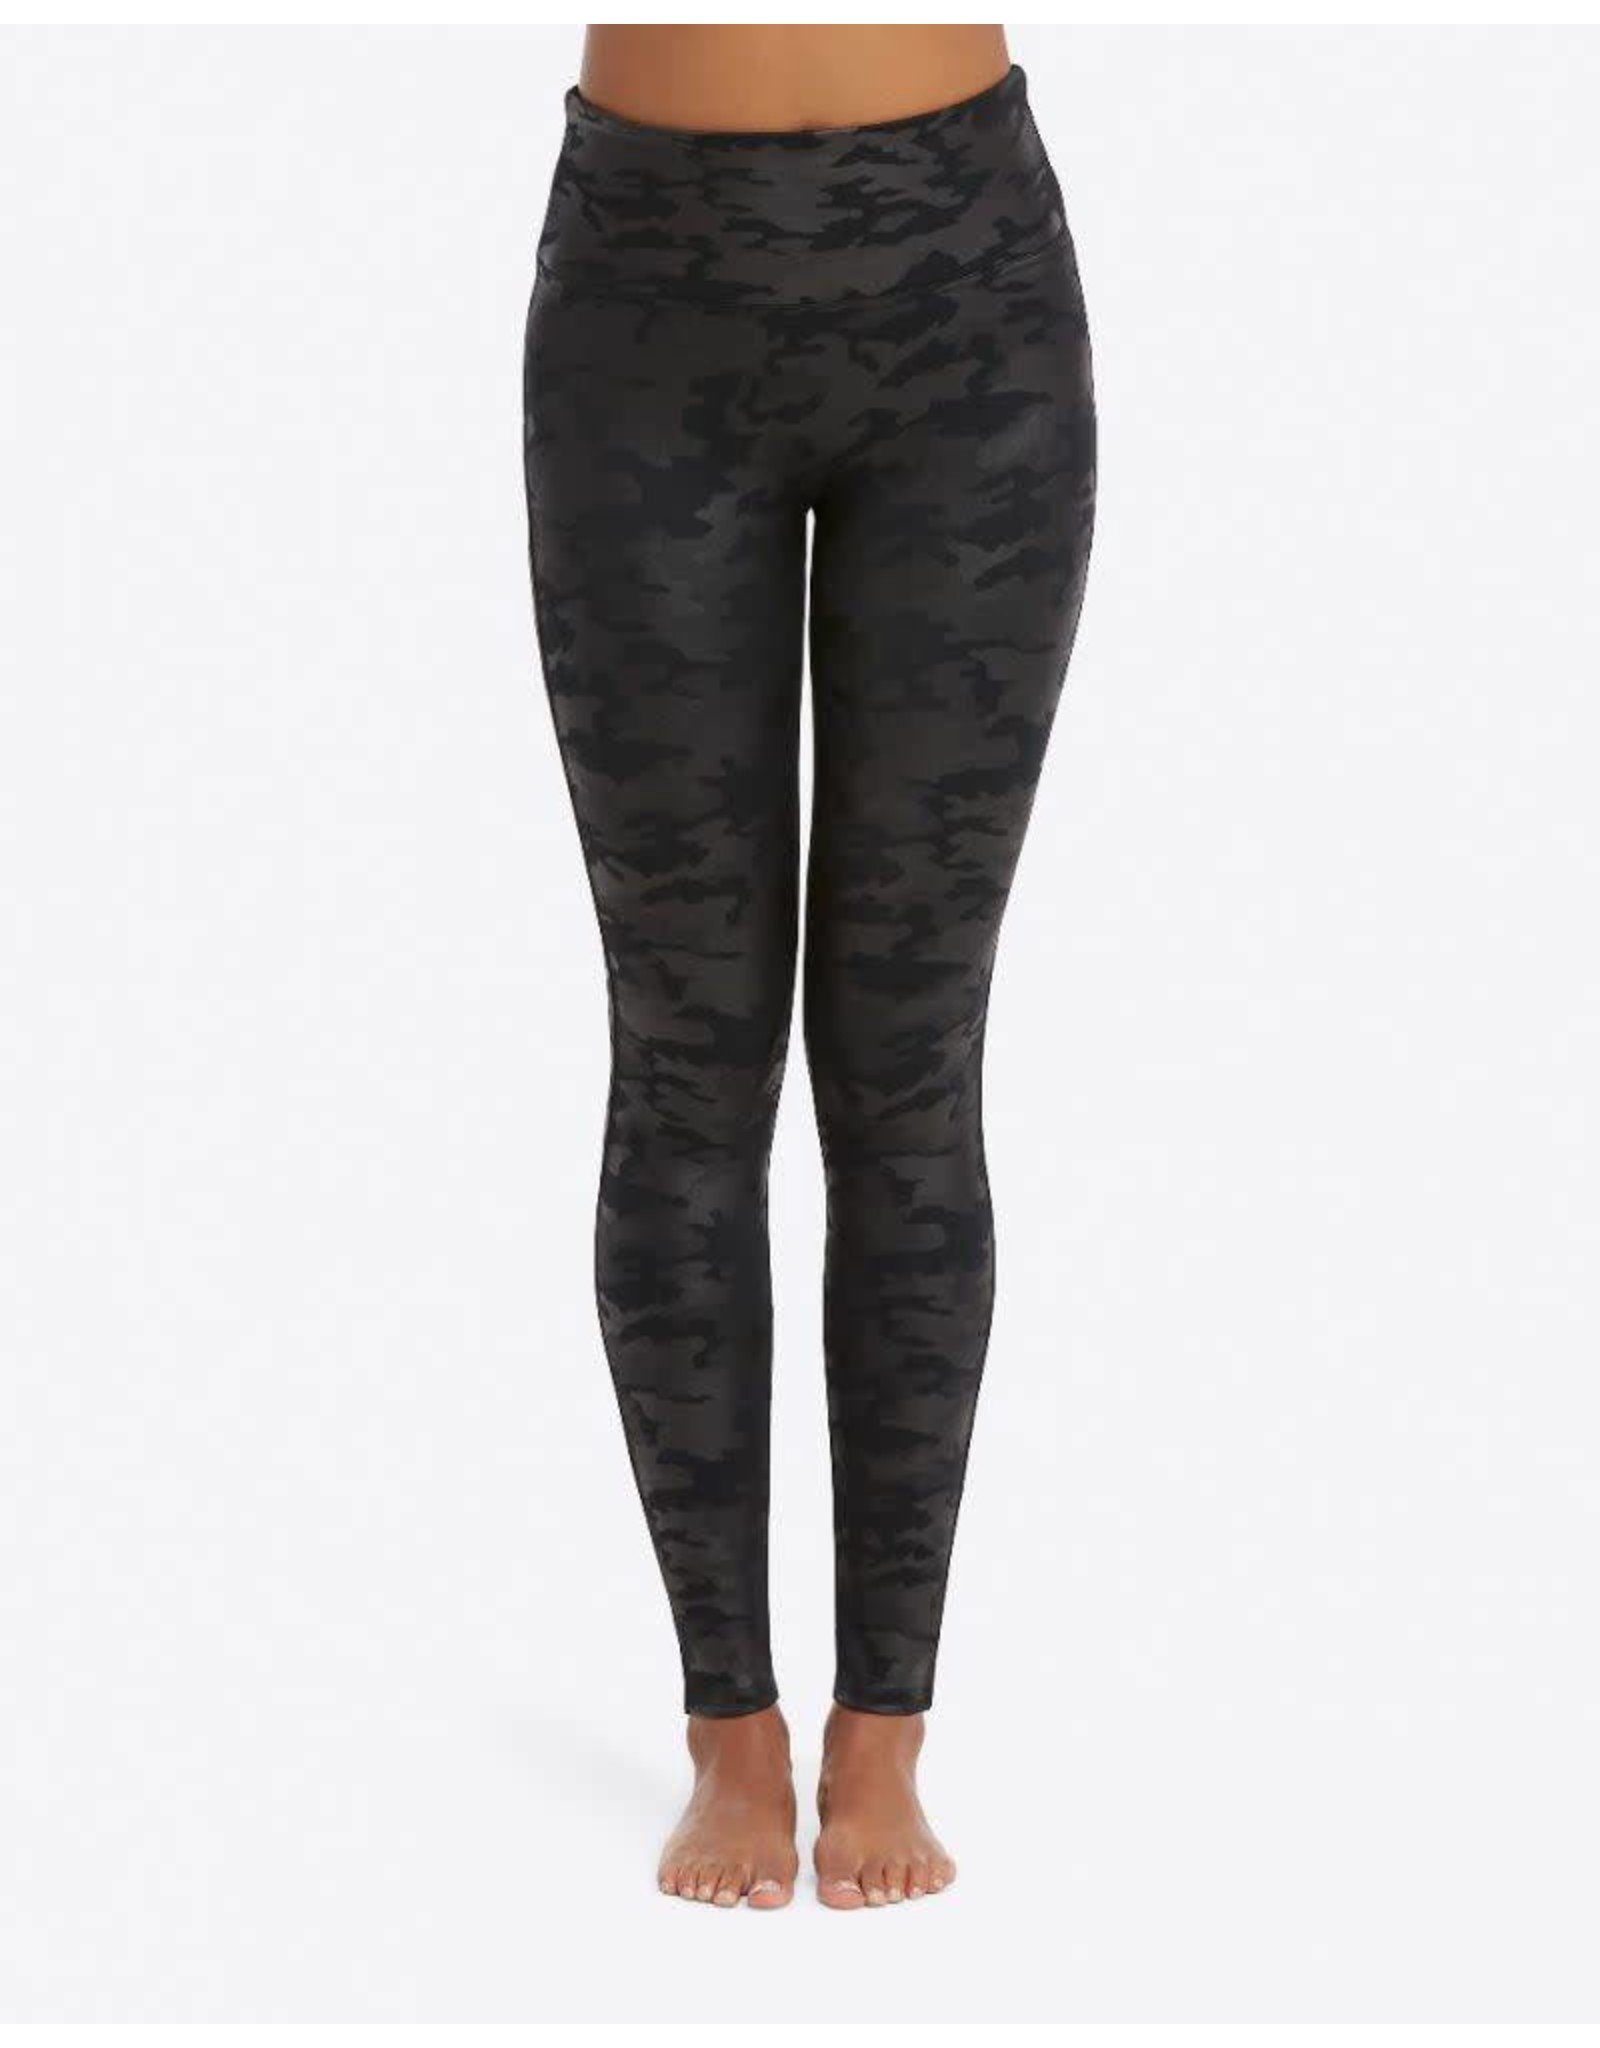 SPANX, Pants & Jumpsuits, Spanx Black Velvet Leggings Size Medium